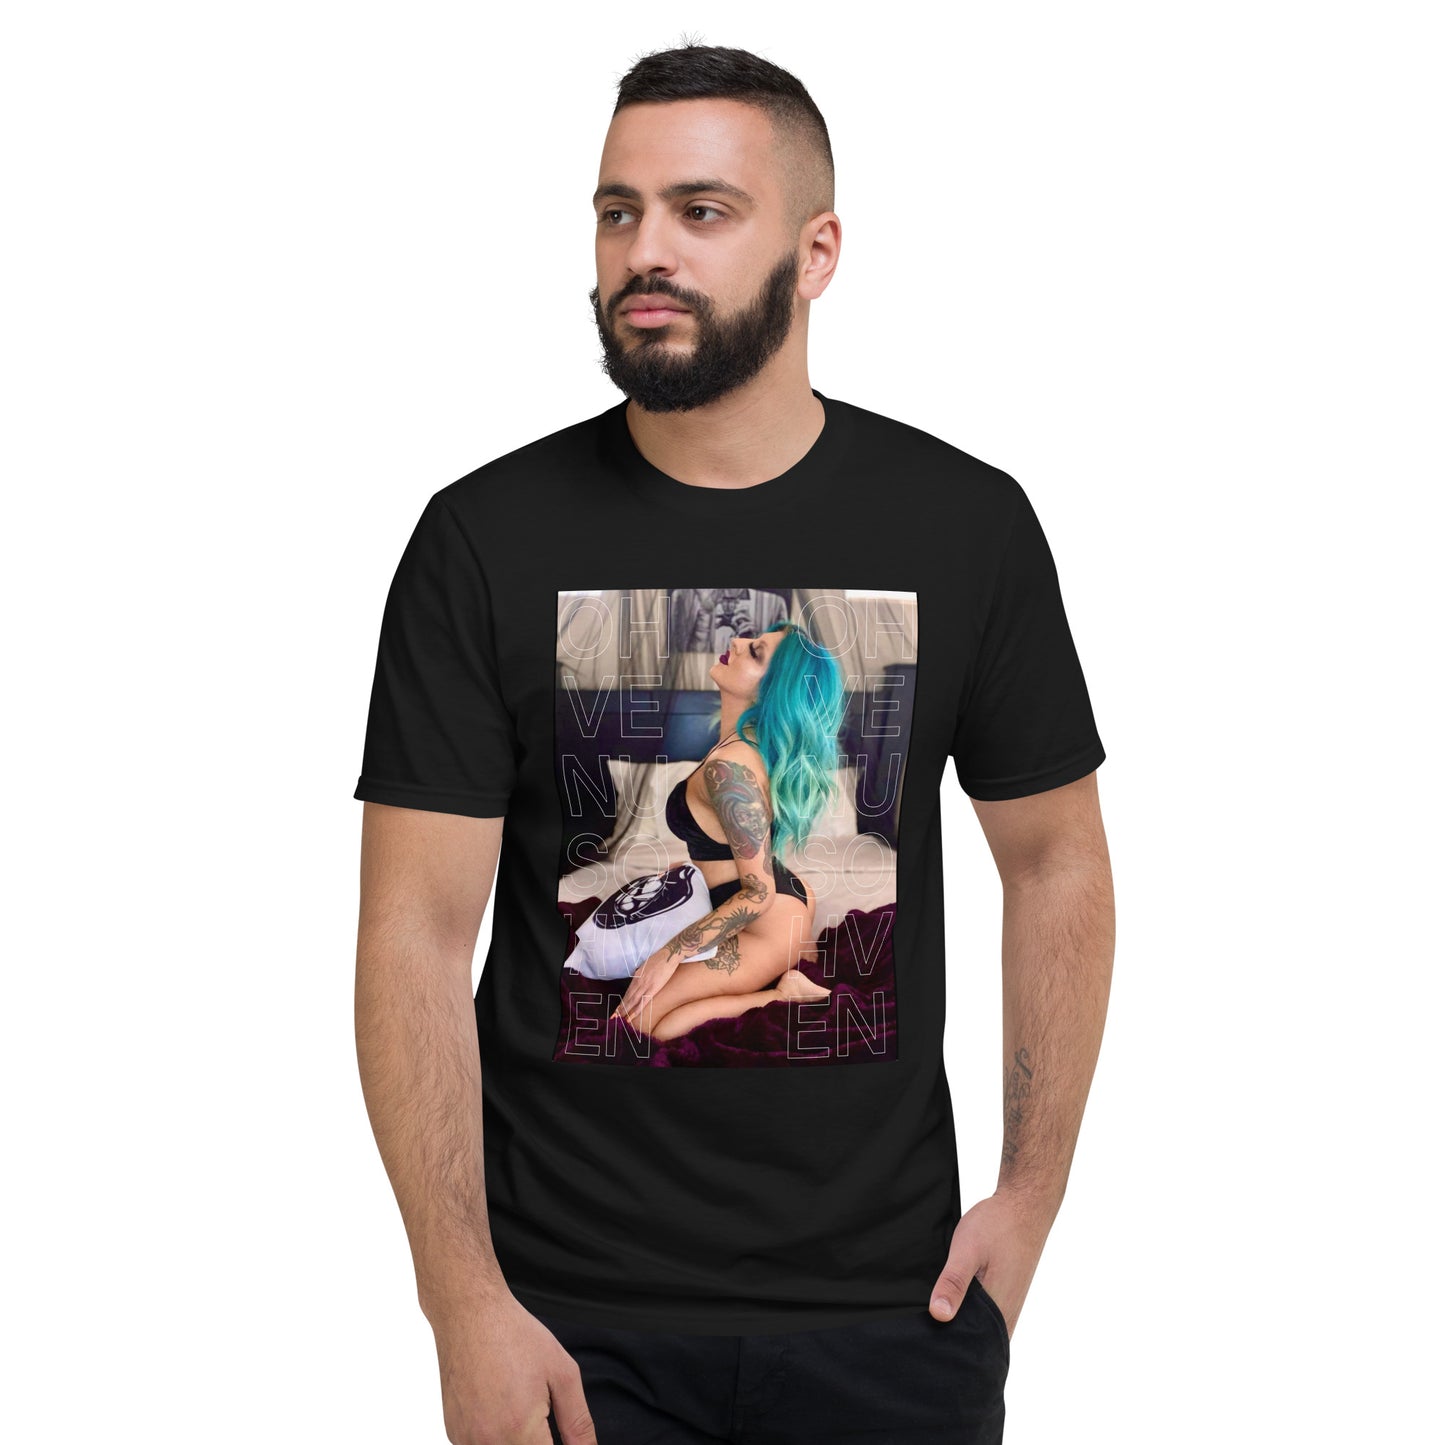 The Real Oh Venus T-Shirt